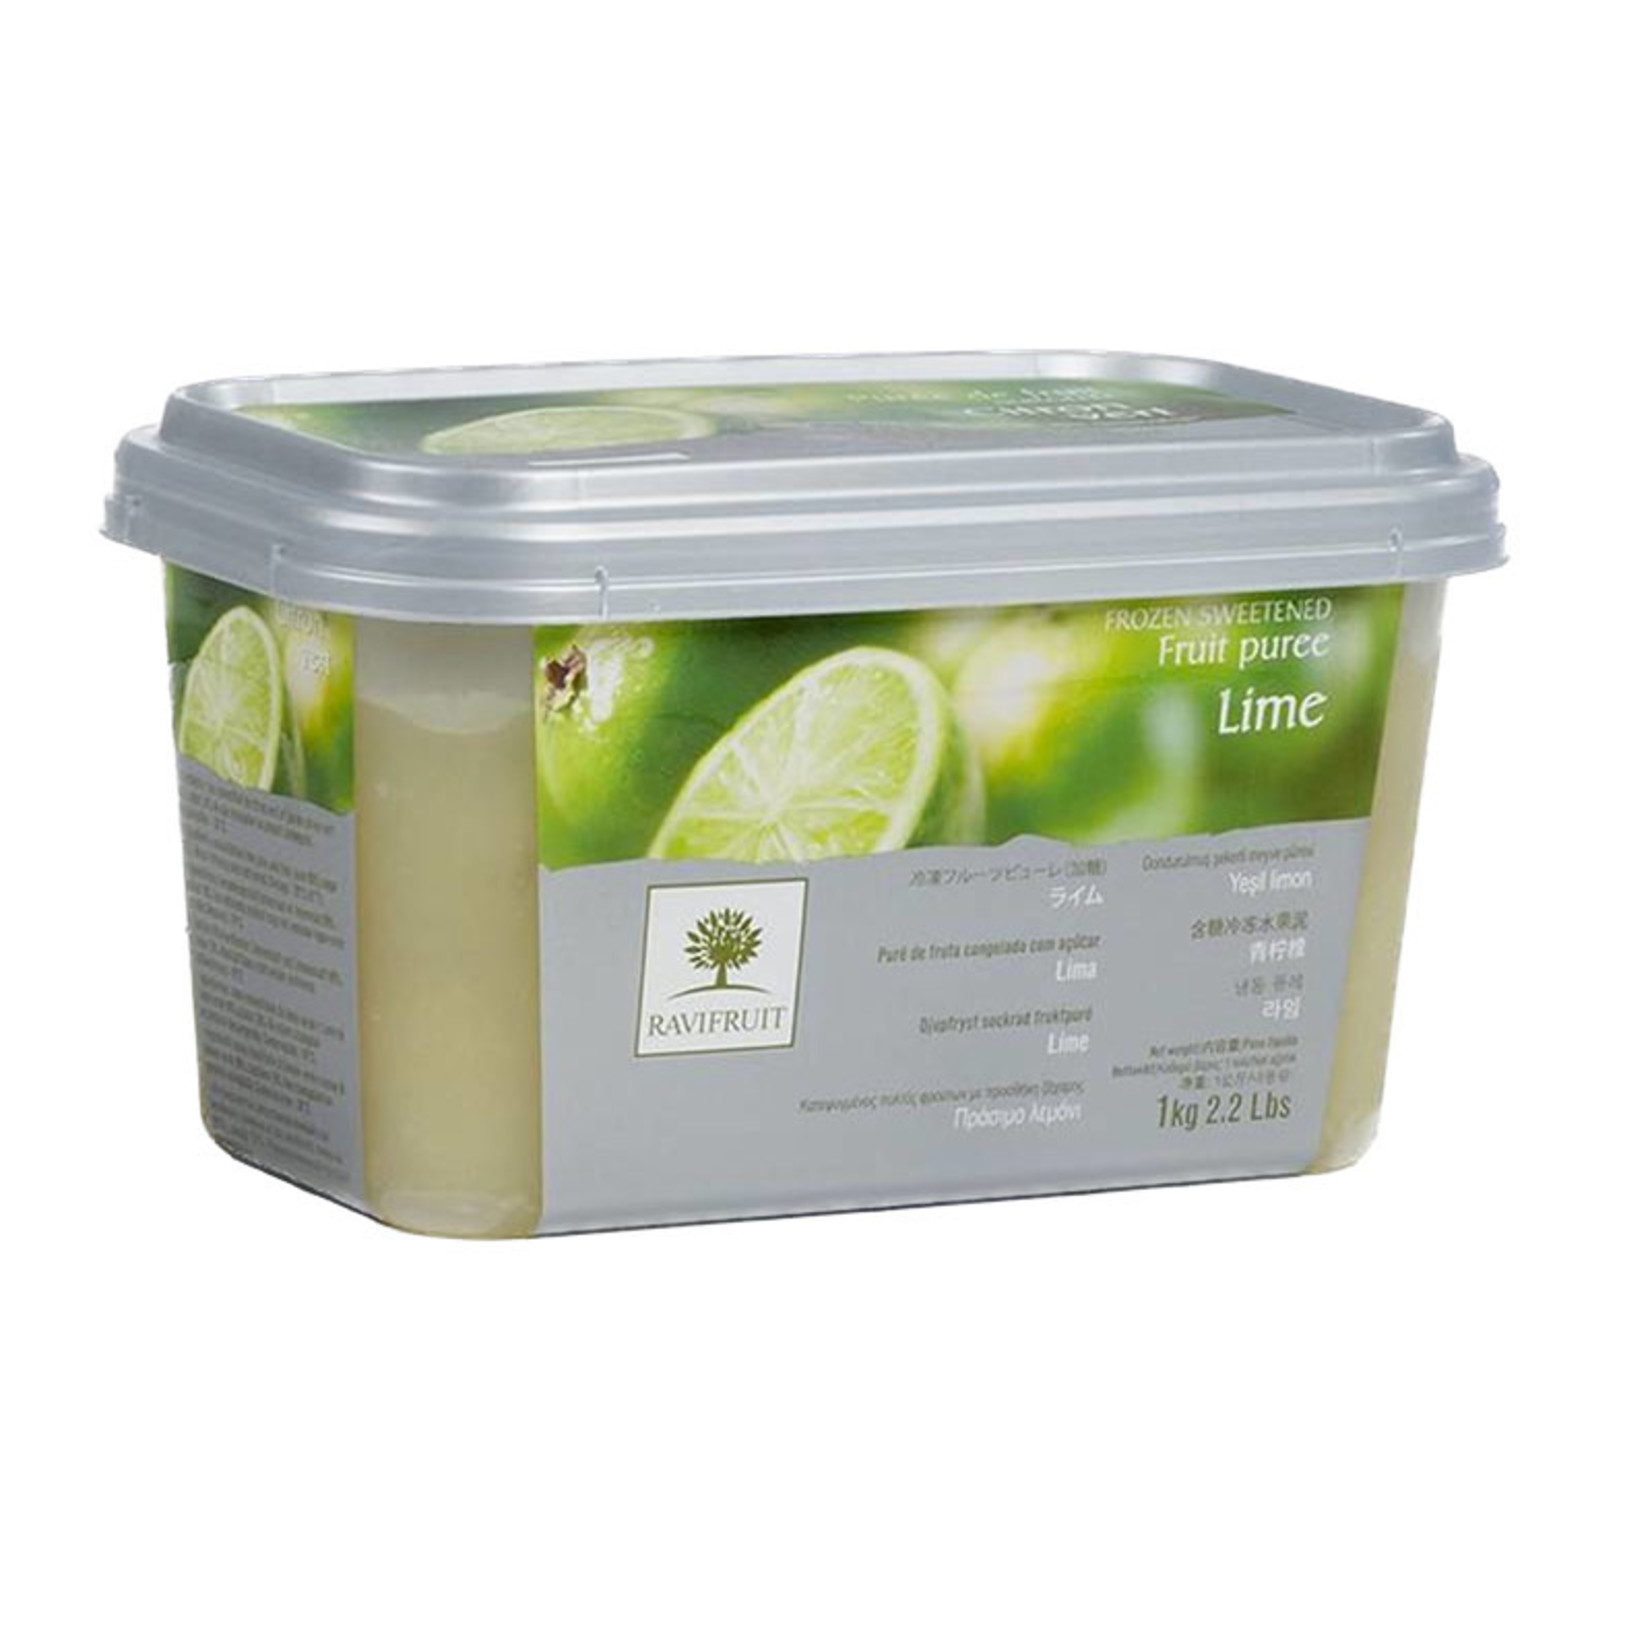 Ravifruit Ravifruit - Lime Puree - 2.2 lb